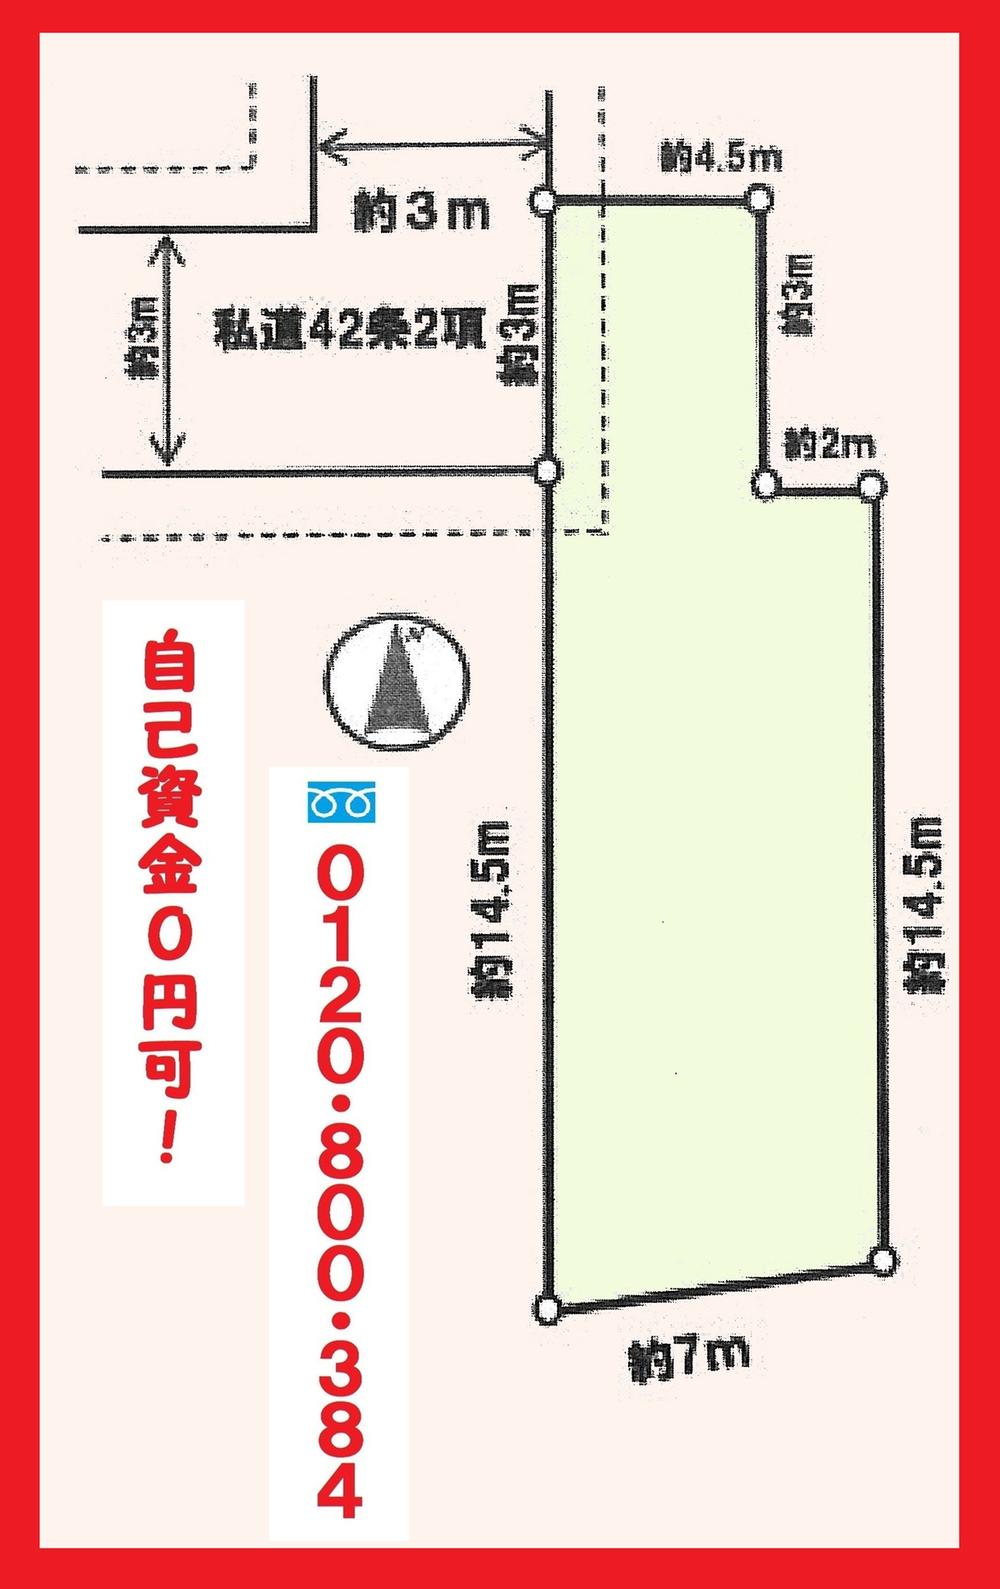 Compartment figure. Land price 16.8 million yen, Land area 115.26 sq m